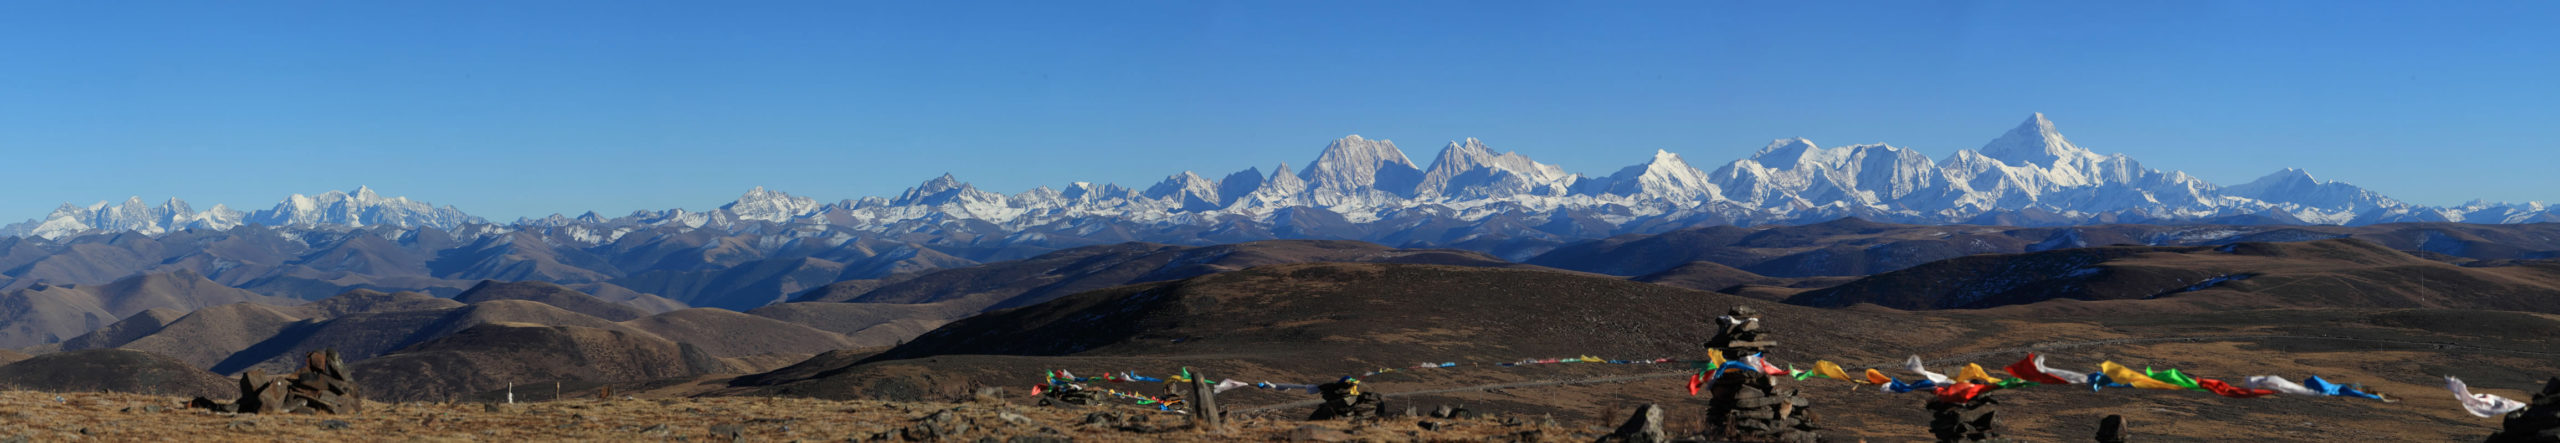 Daxueshan Mountain Range